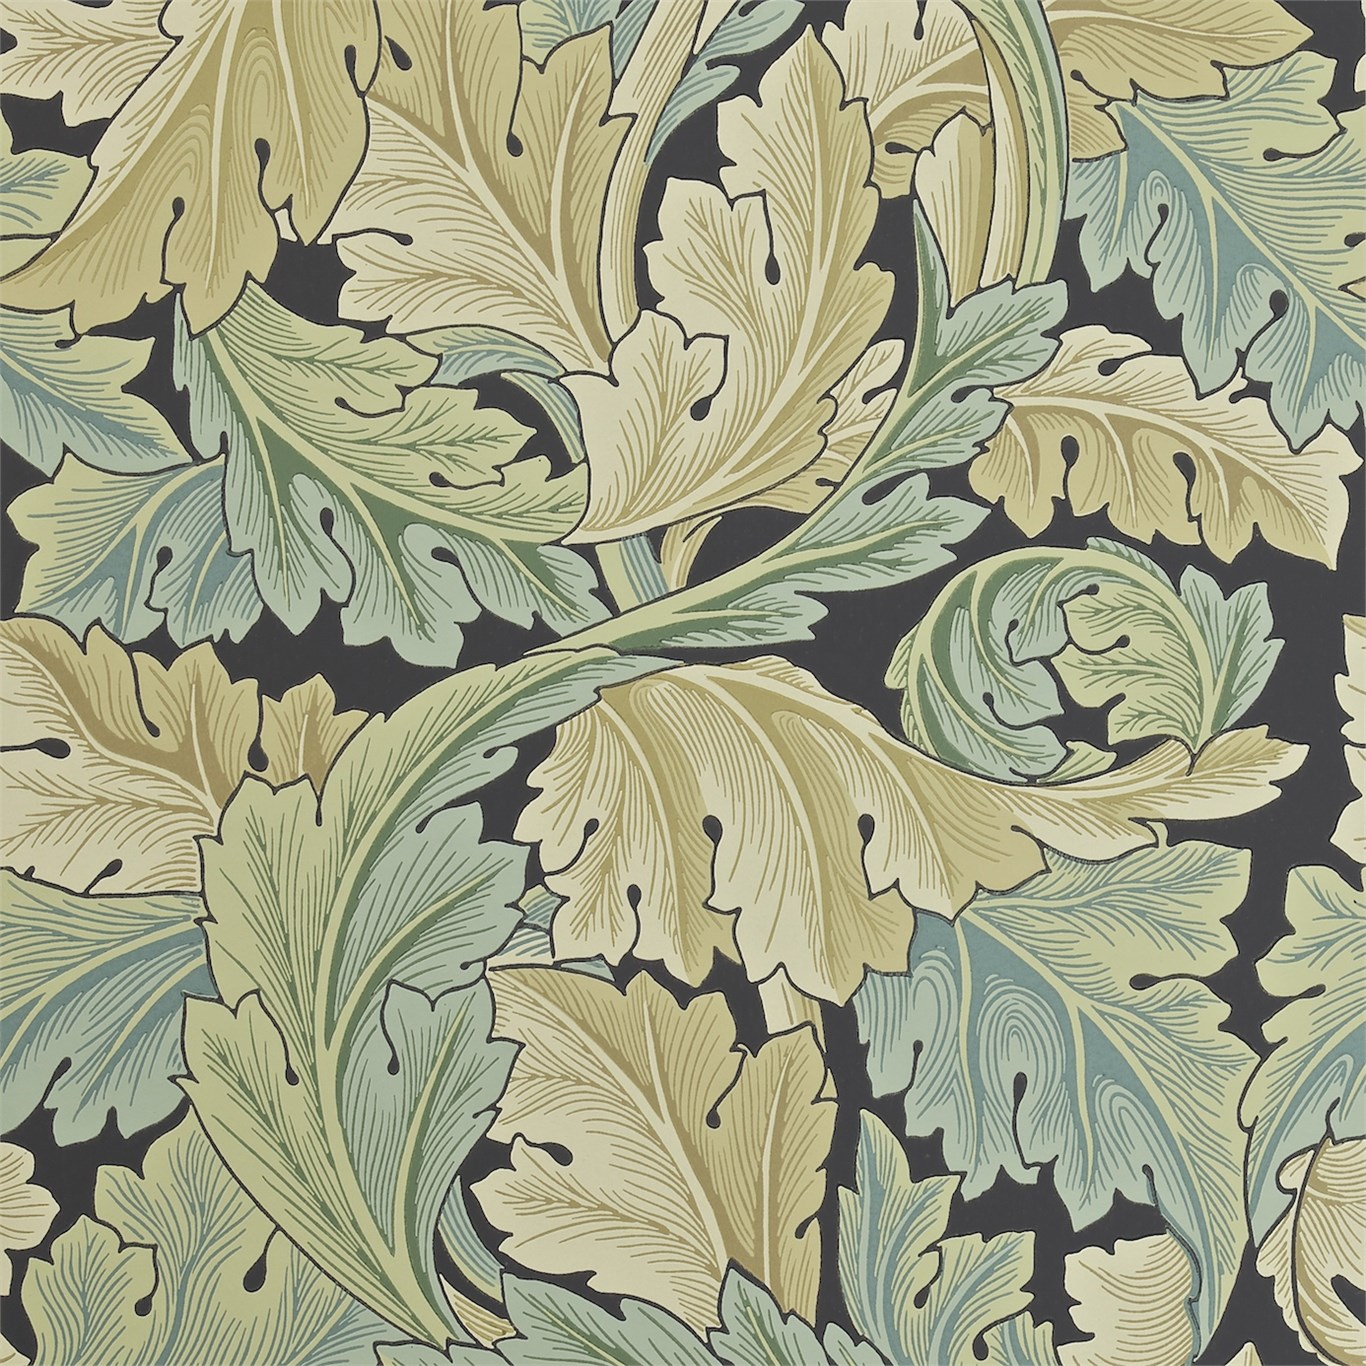 William Morris Wallpapers